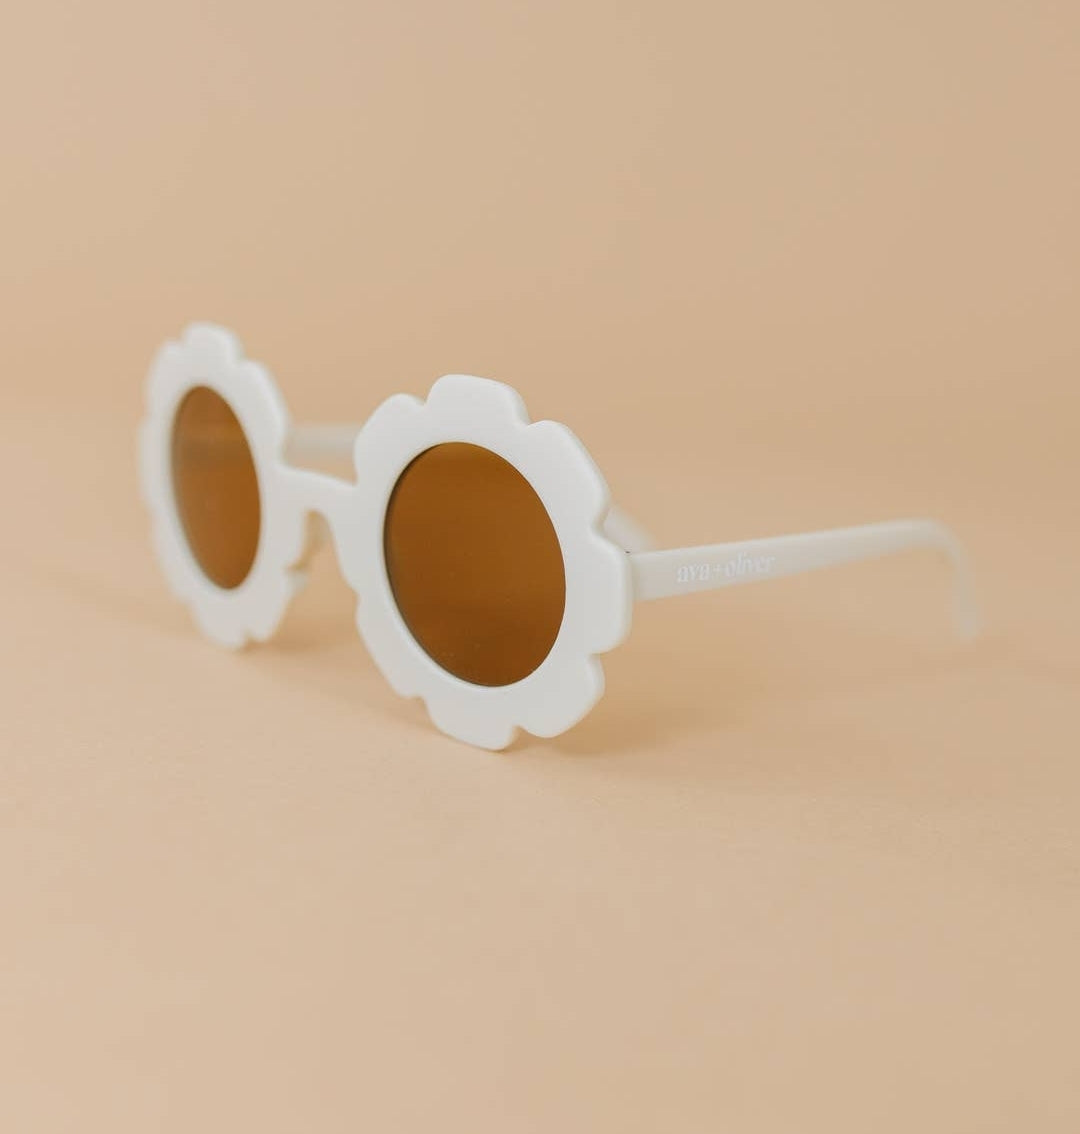 Flower Sunglasses- Cream